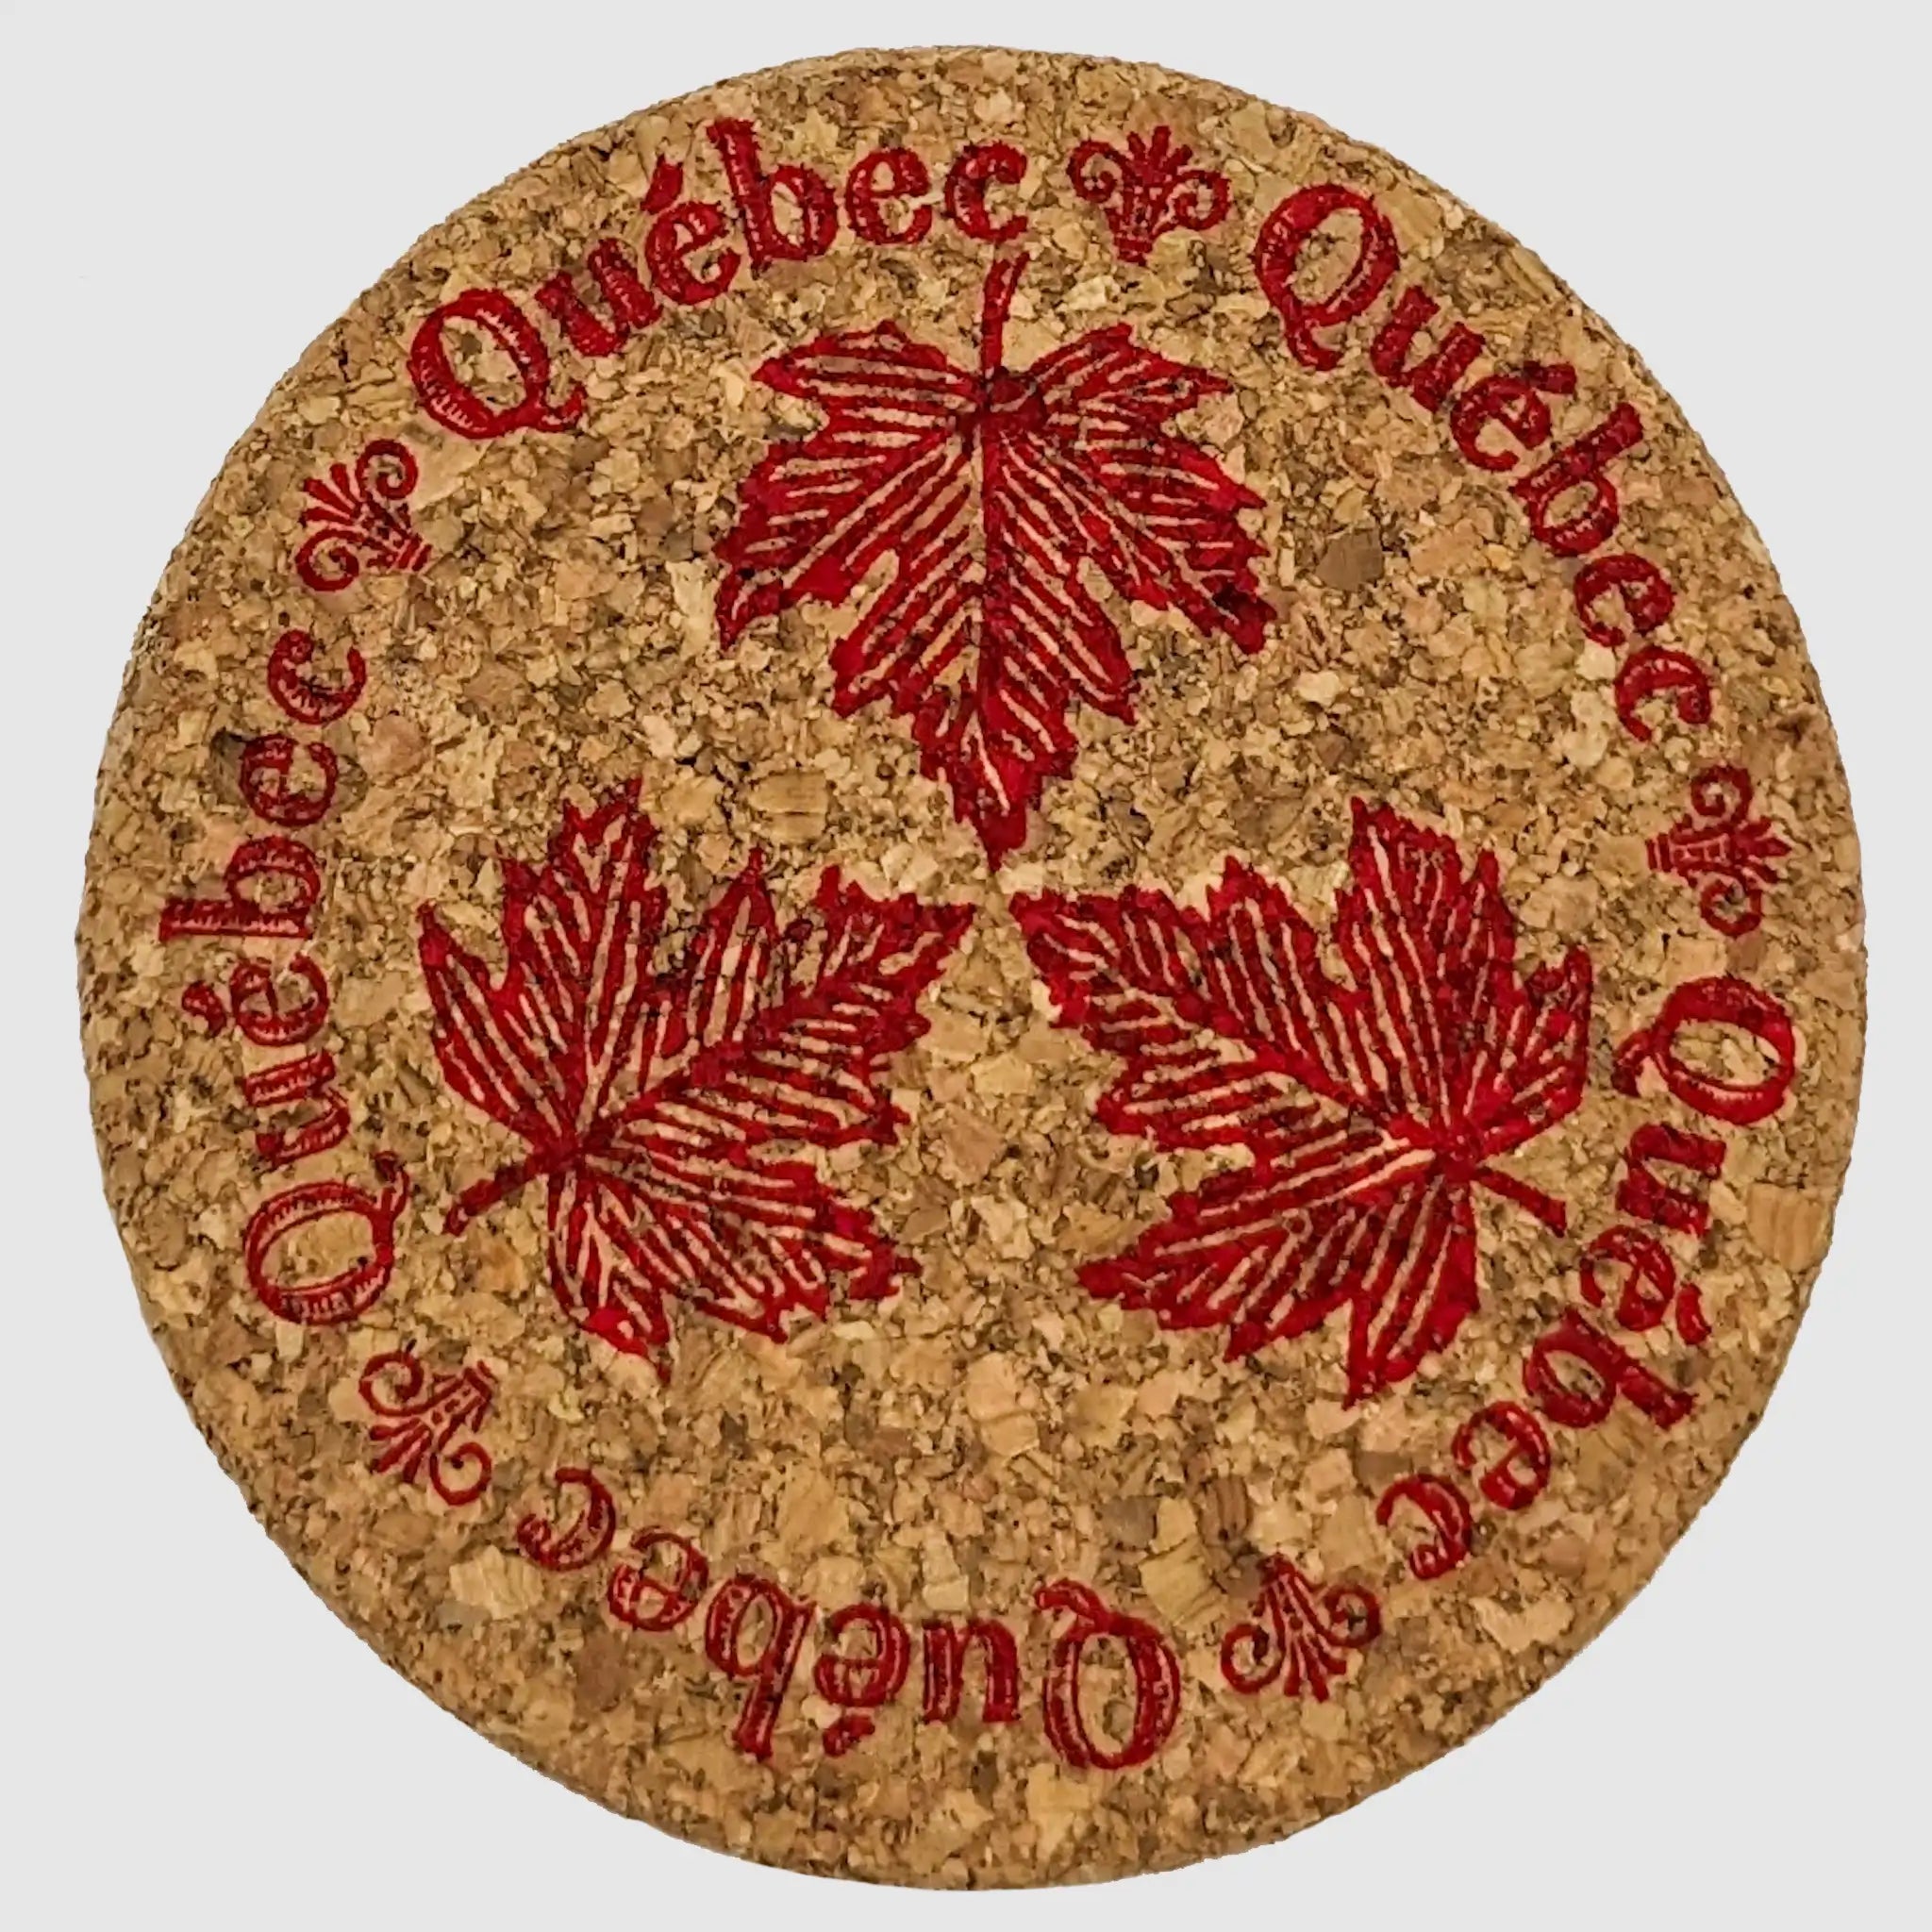 Québec Maple Leaves Coasters